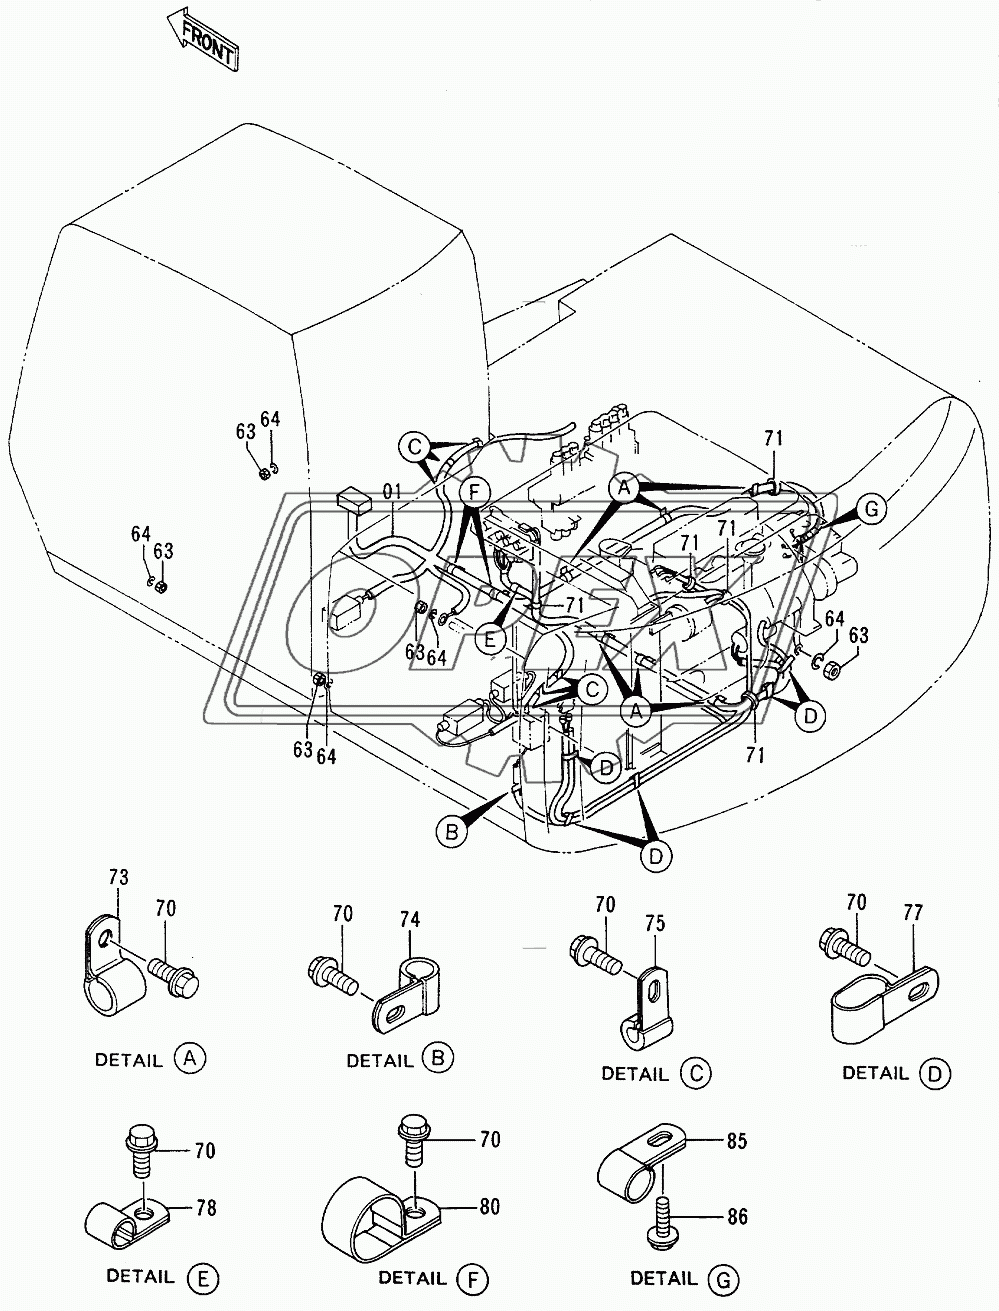 Electric Parts (3—4)